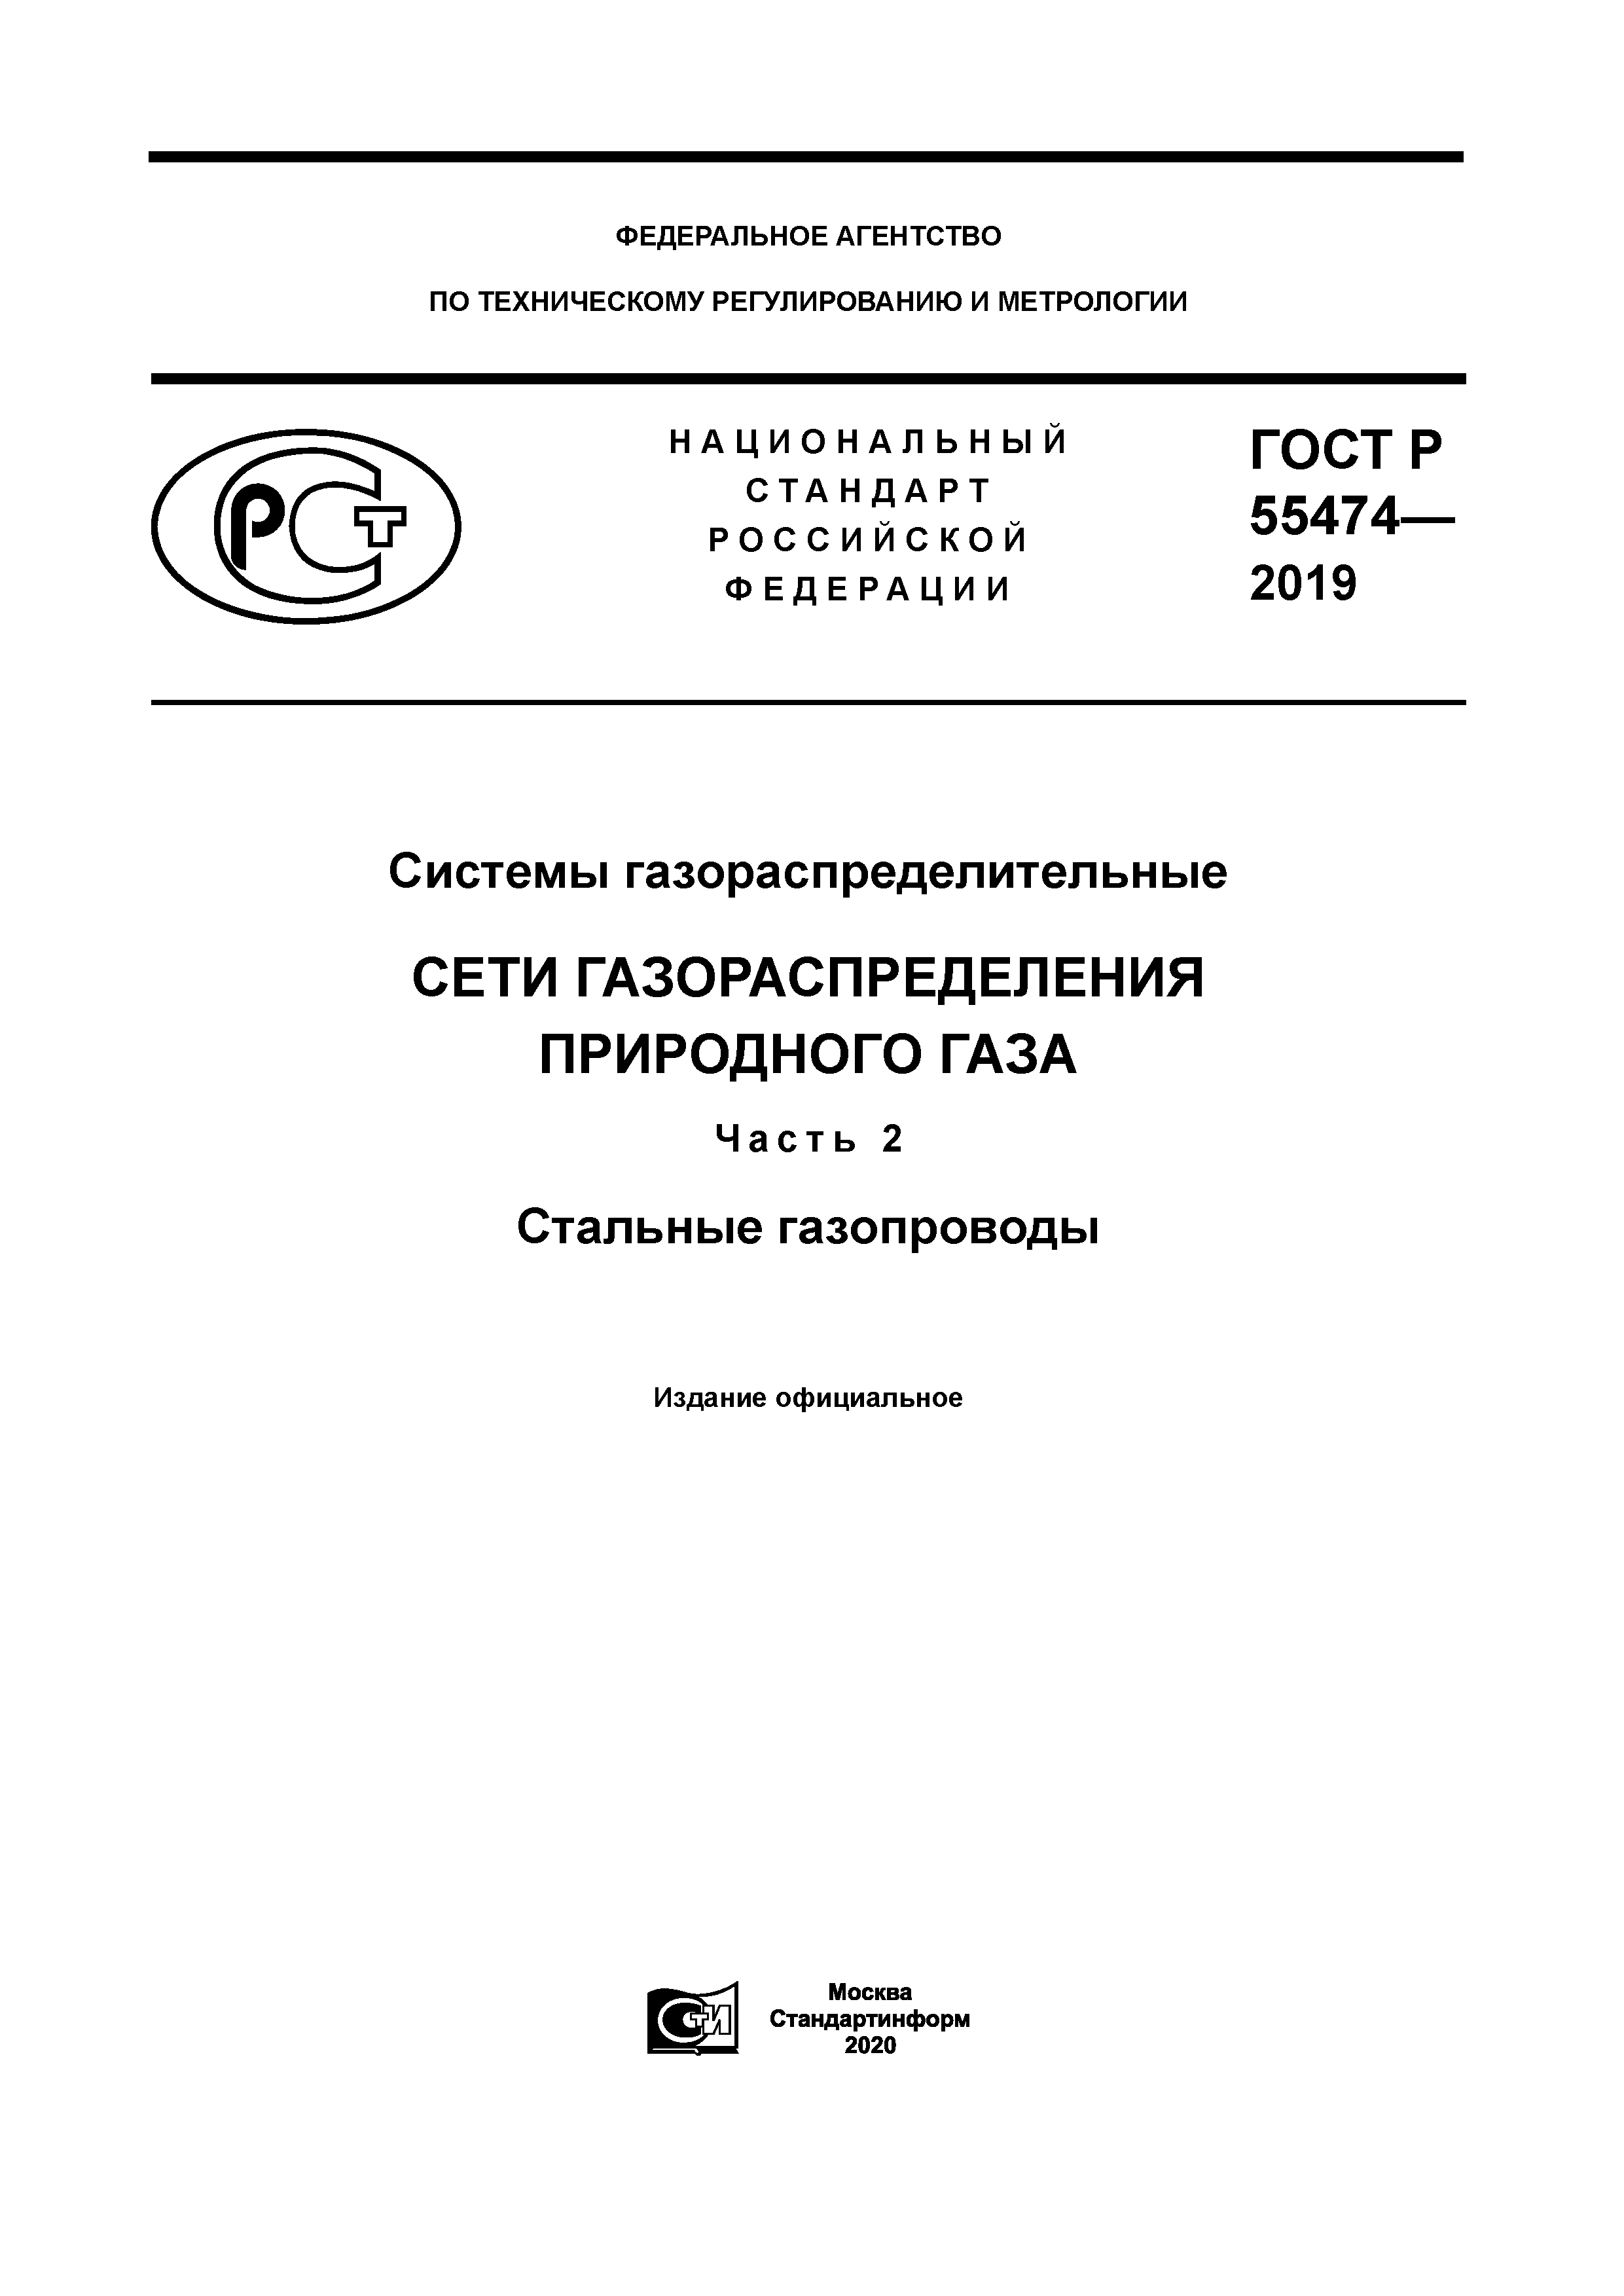 ГОСТ Р 55474-2019